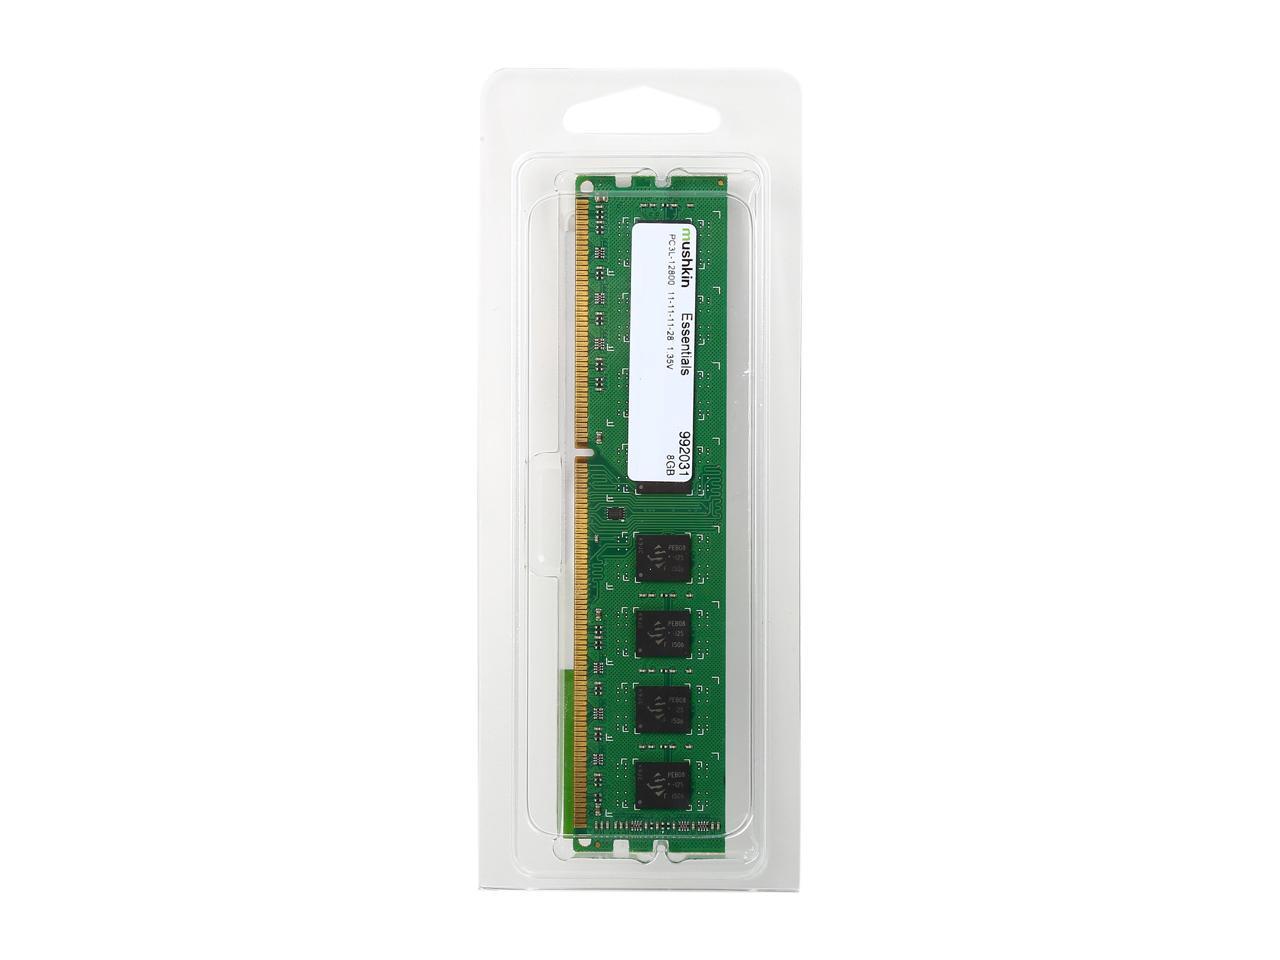 Mushkin Enhanced Essentials 8GB DDR3 1600 (PC3 12800) Desktop Memory Model 992031